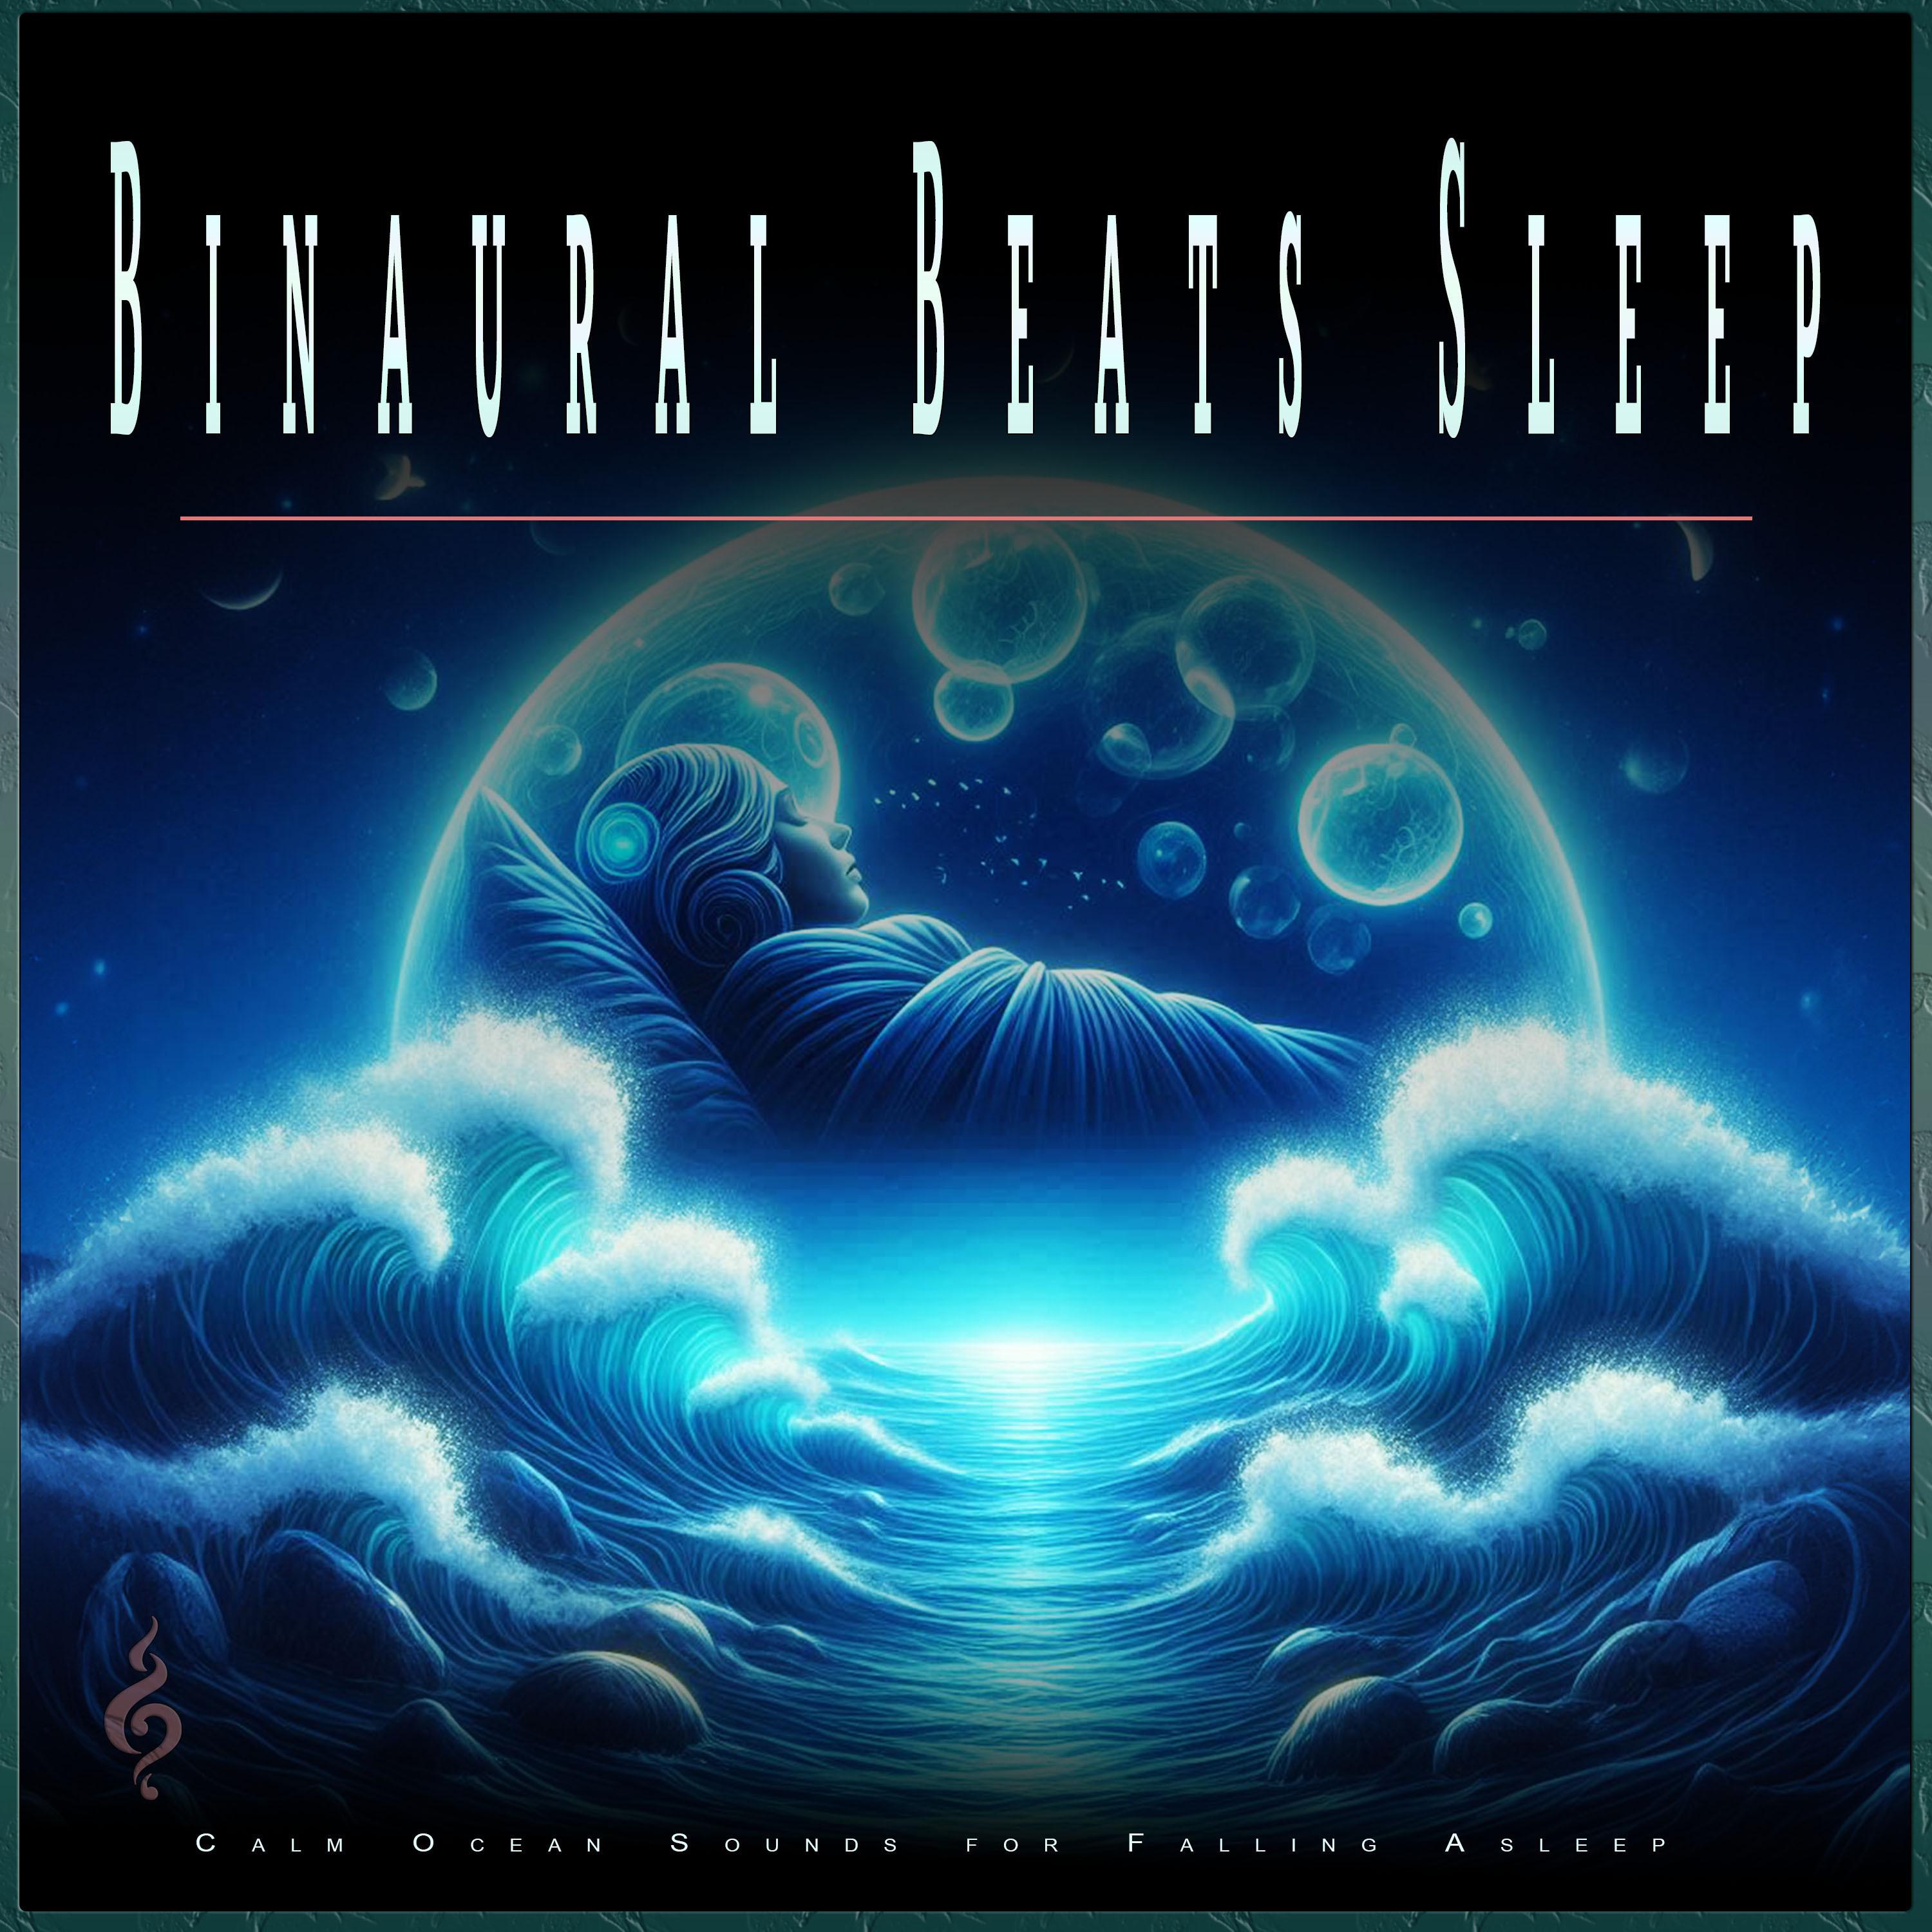 Ambient Sleeping Music - Binaural Beats and Ocean Wave Sounds